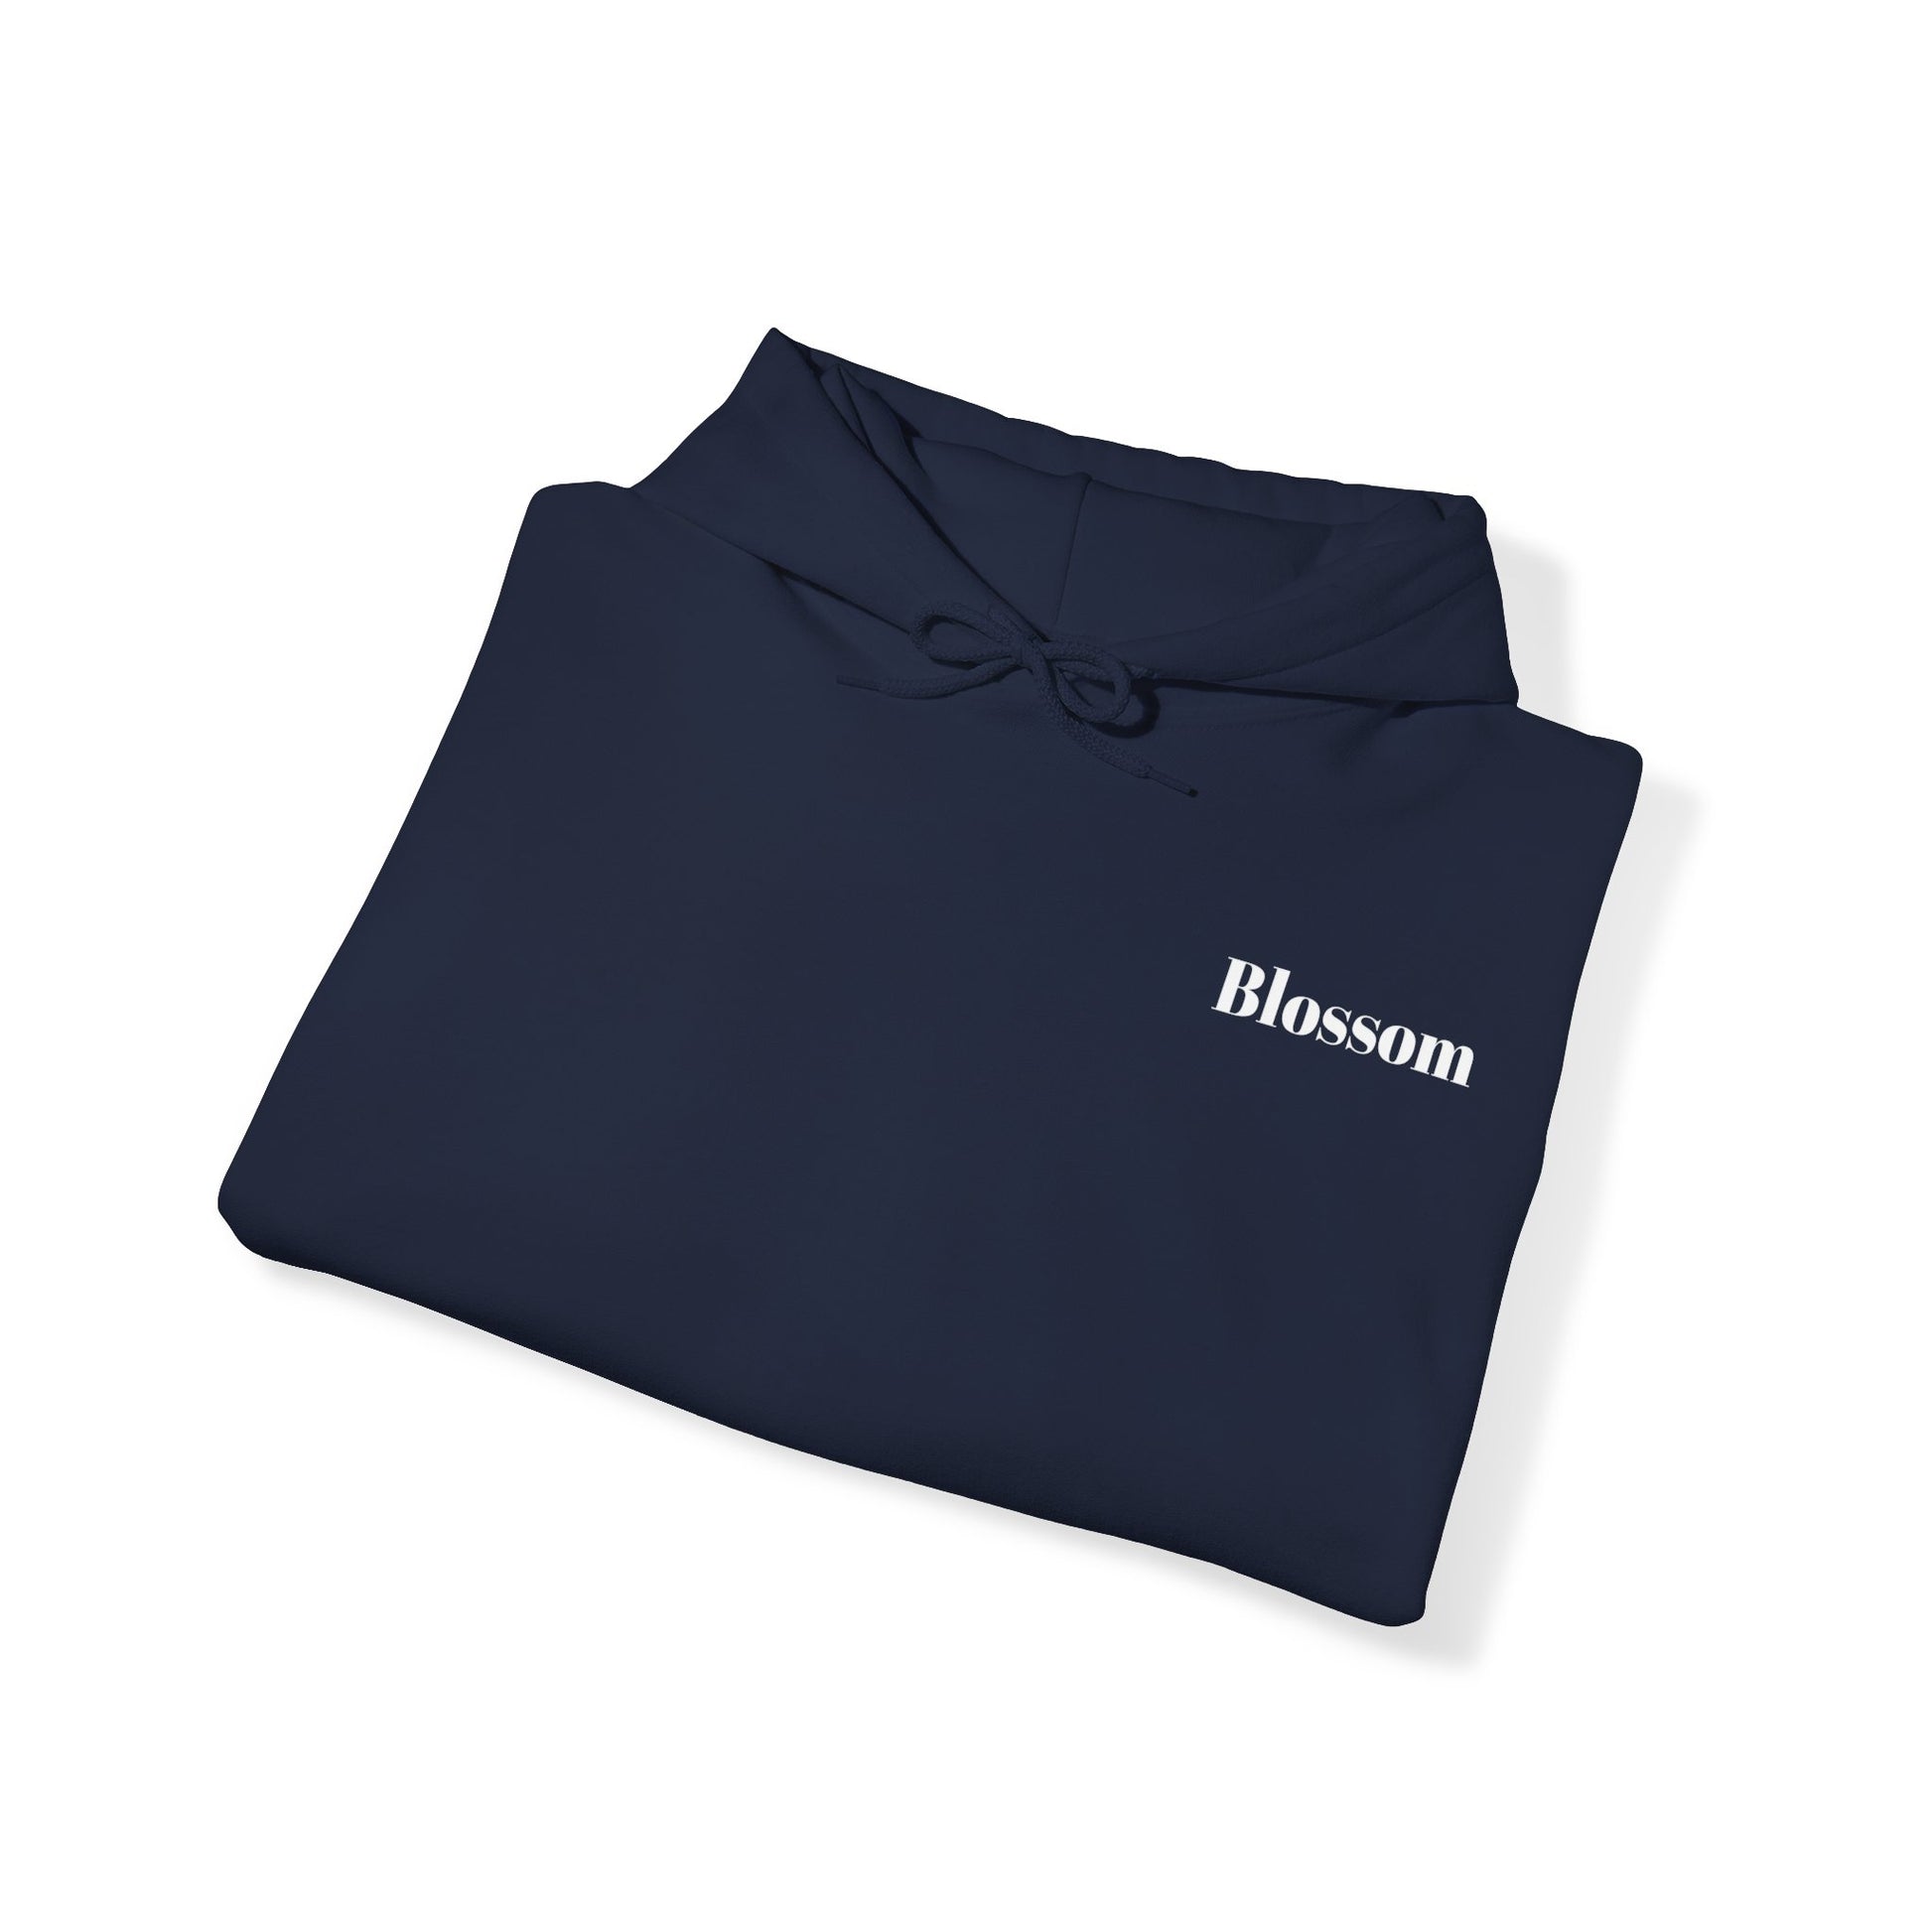 Blossom Unisex Hooded Sweatshirt with Heavy Blend Fabric21